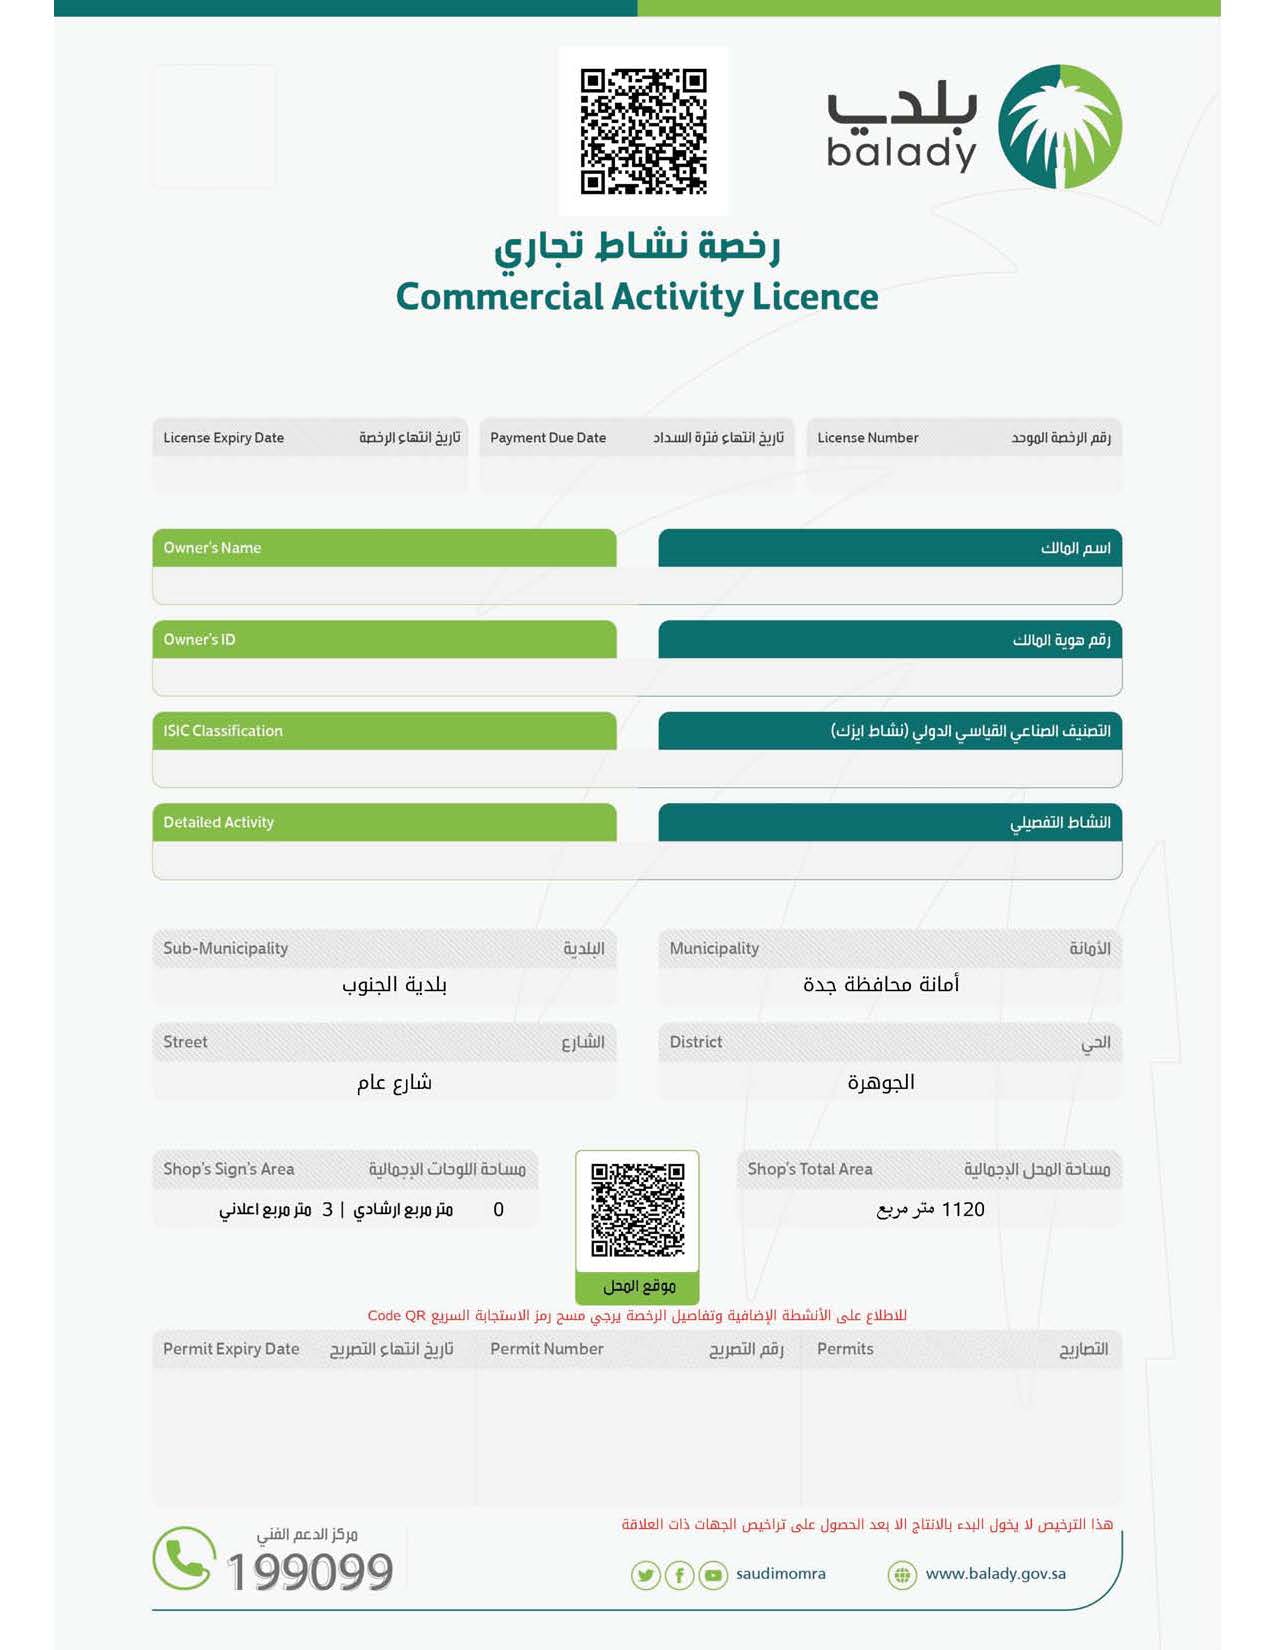 البلديات Page 18 One of the leading companies and a significant number in all its fields